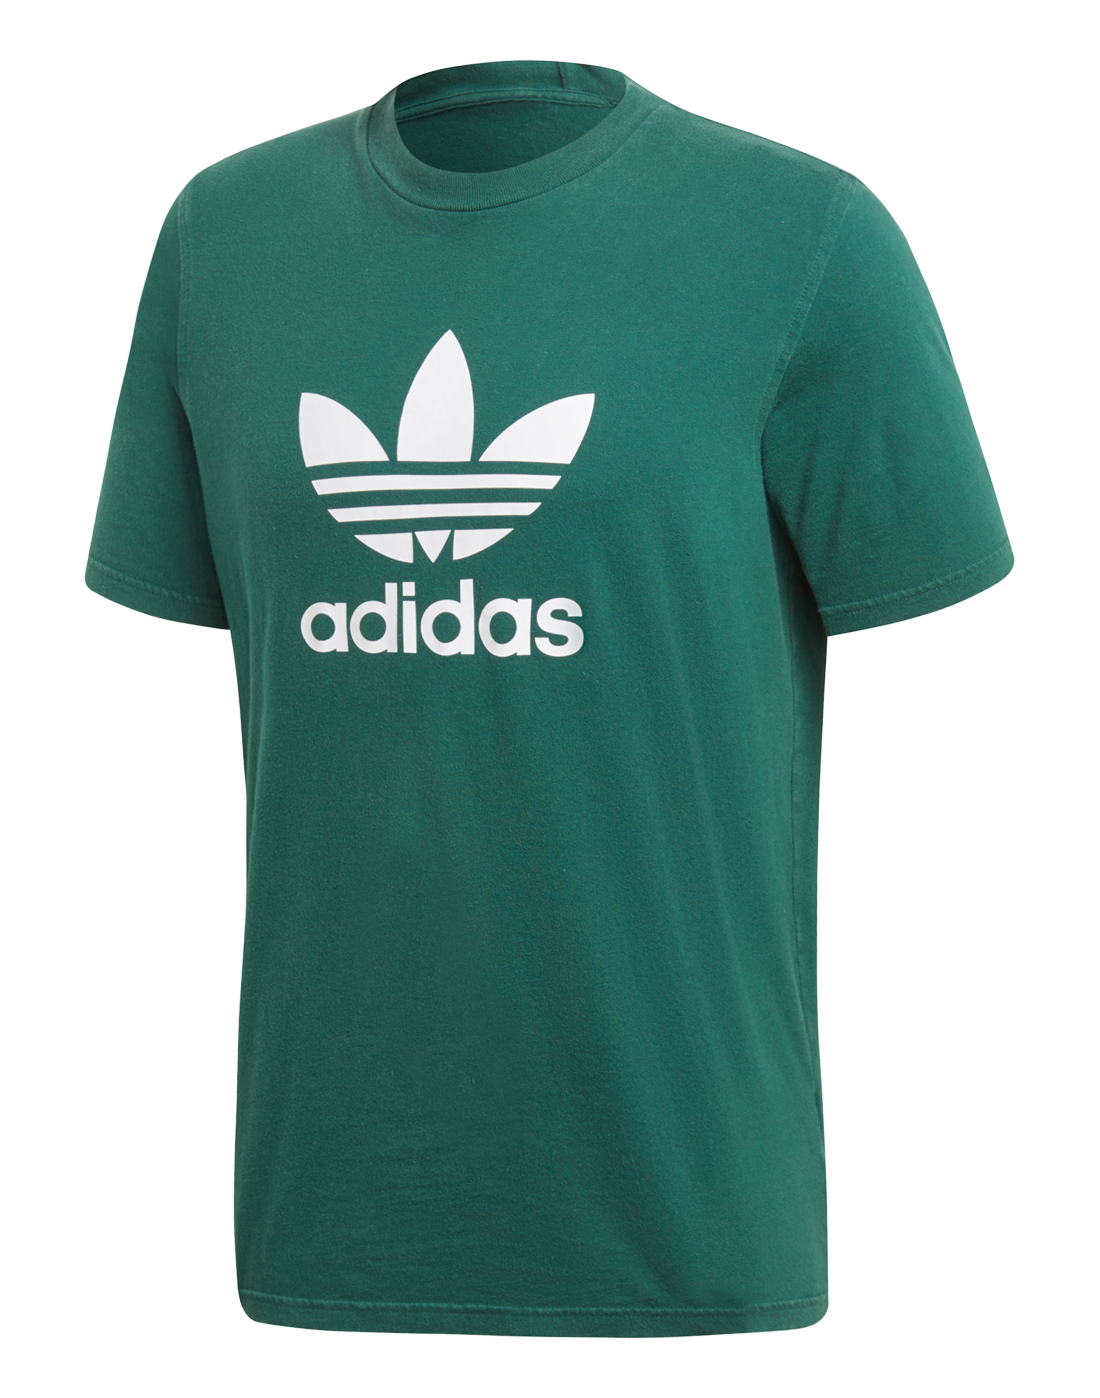 Адидас футболка 44. Adidas t Shirt. Adidas t-Shirt Green Trefoil. T shortрб адидас. Adidas Originals t Shirt.